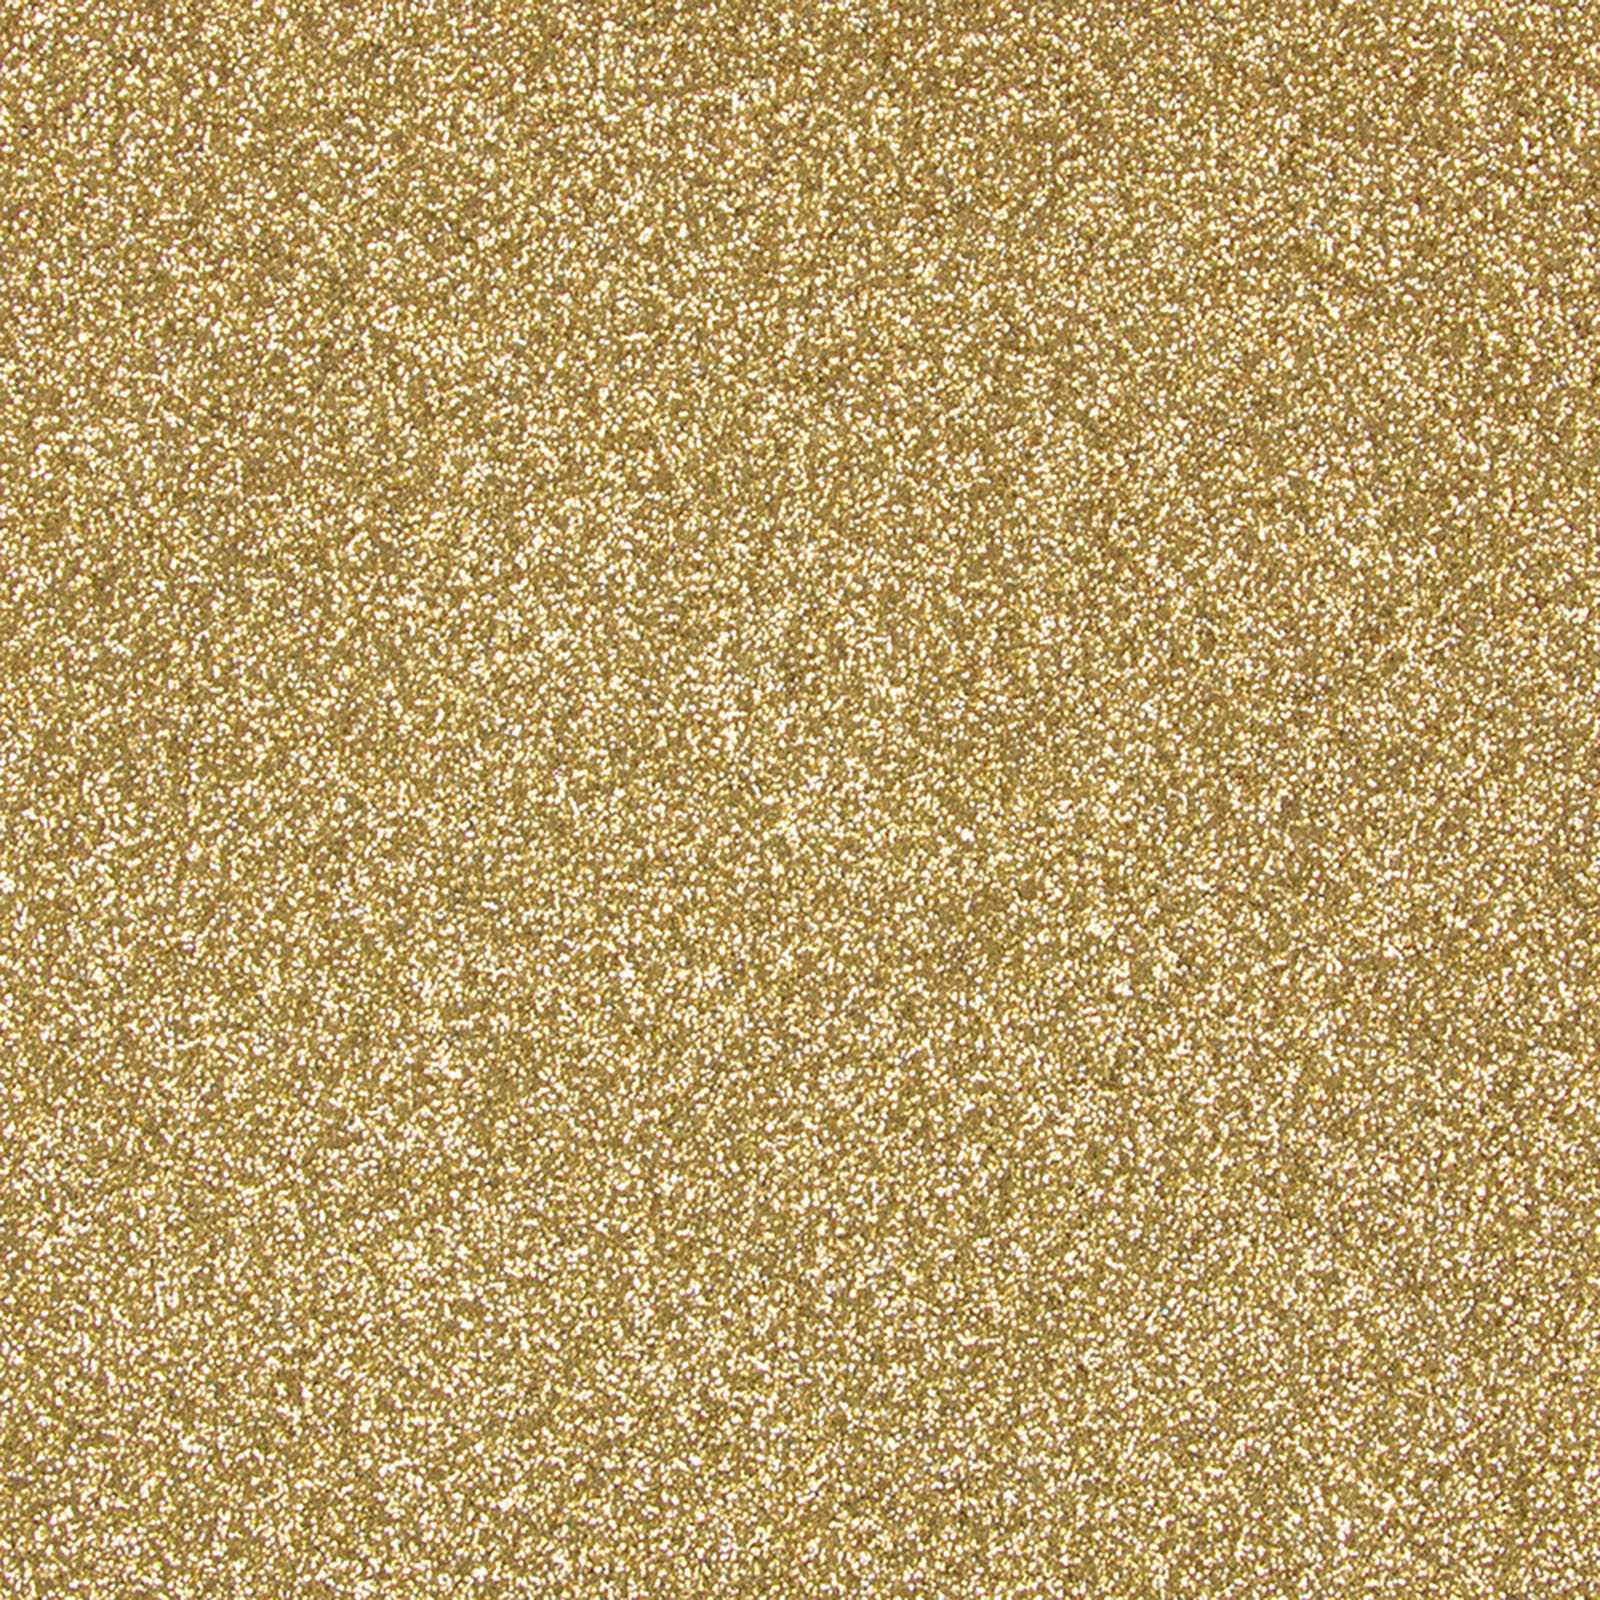 Craft Perfect • Glitter A4 x5 250g Gold dust